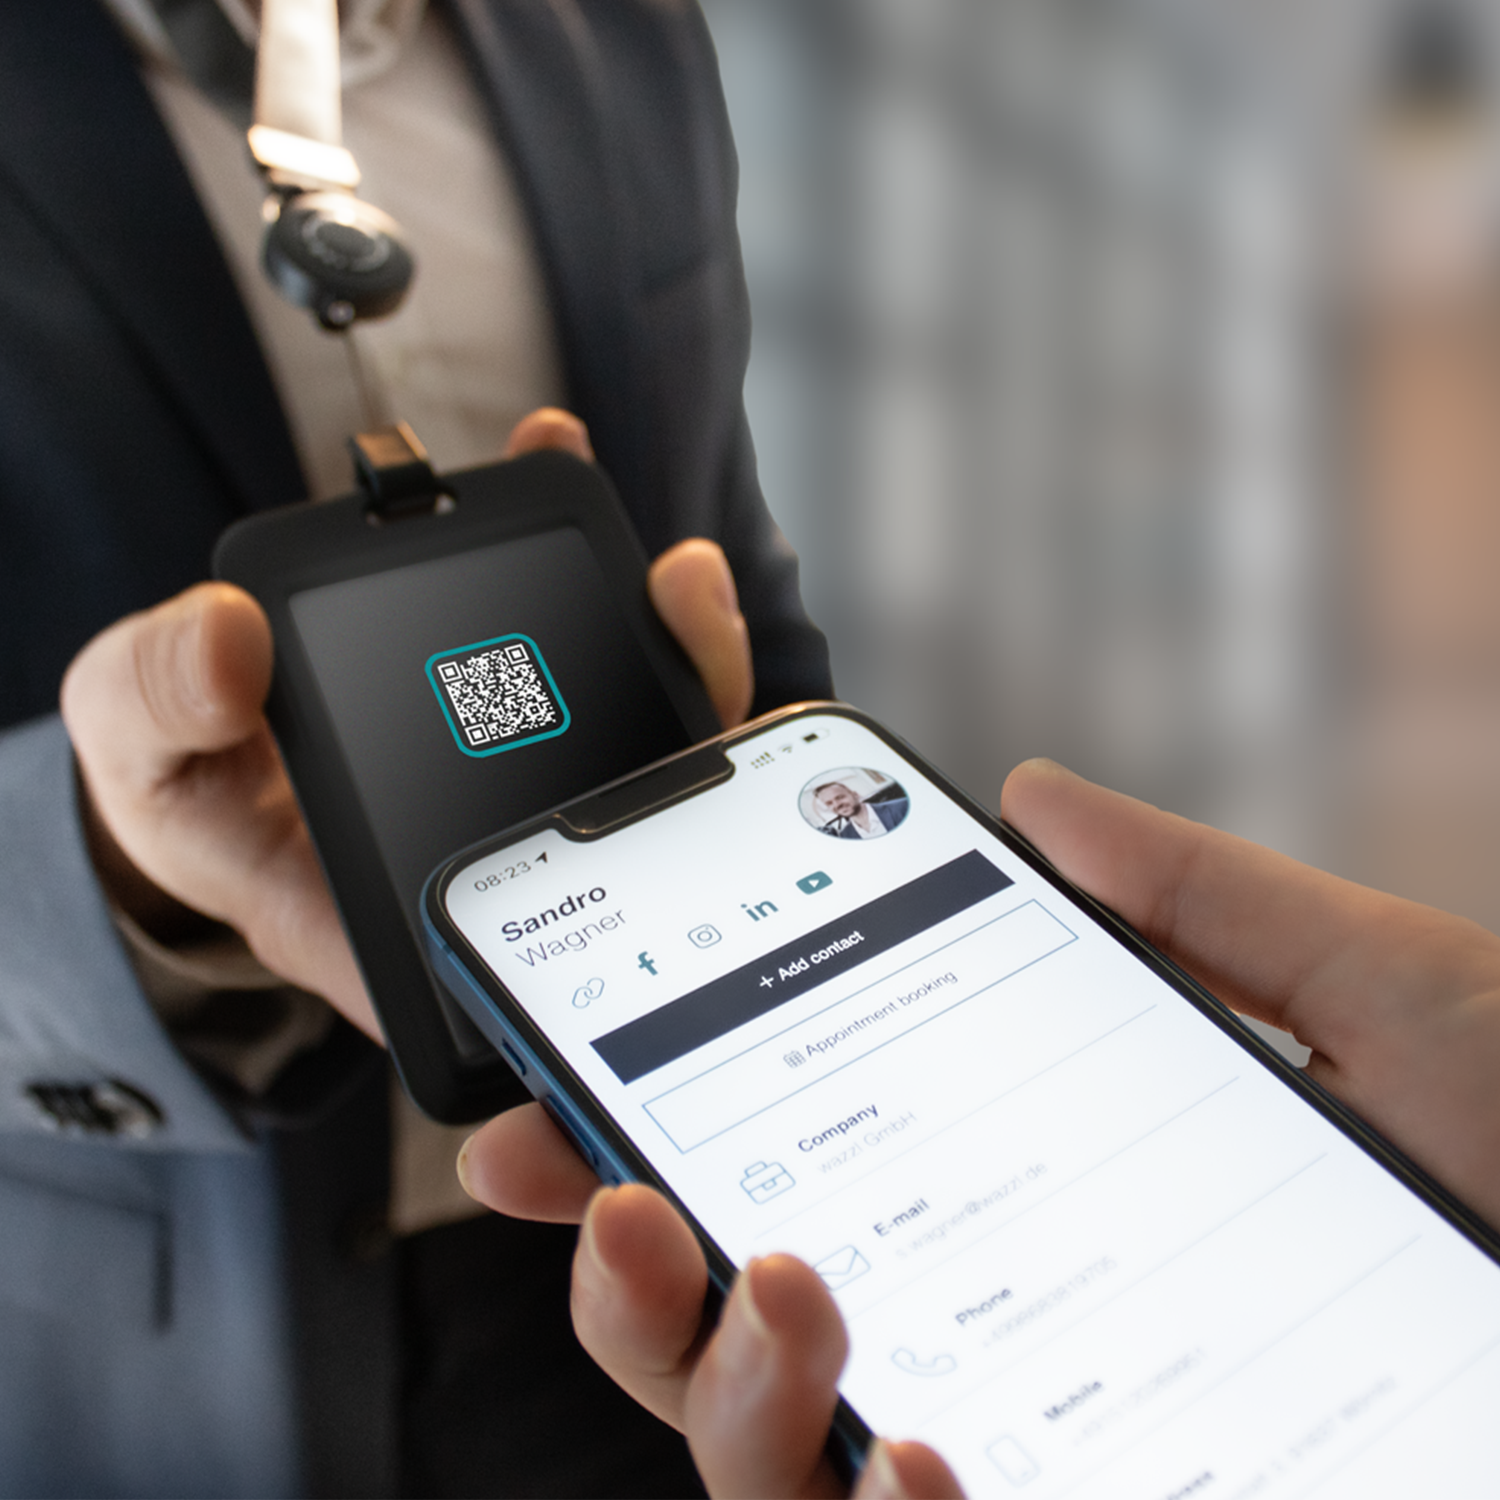 Insignia inteligente personalizable - Tarjeta de visita digital NFC